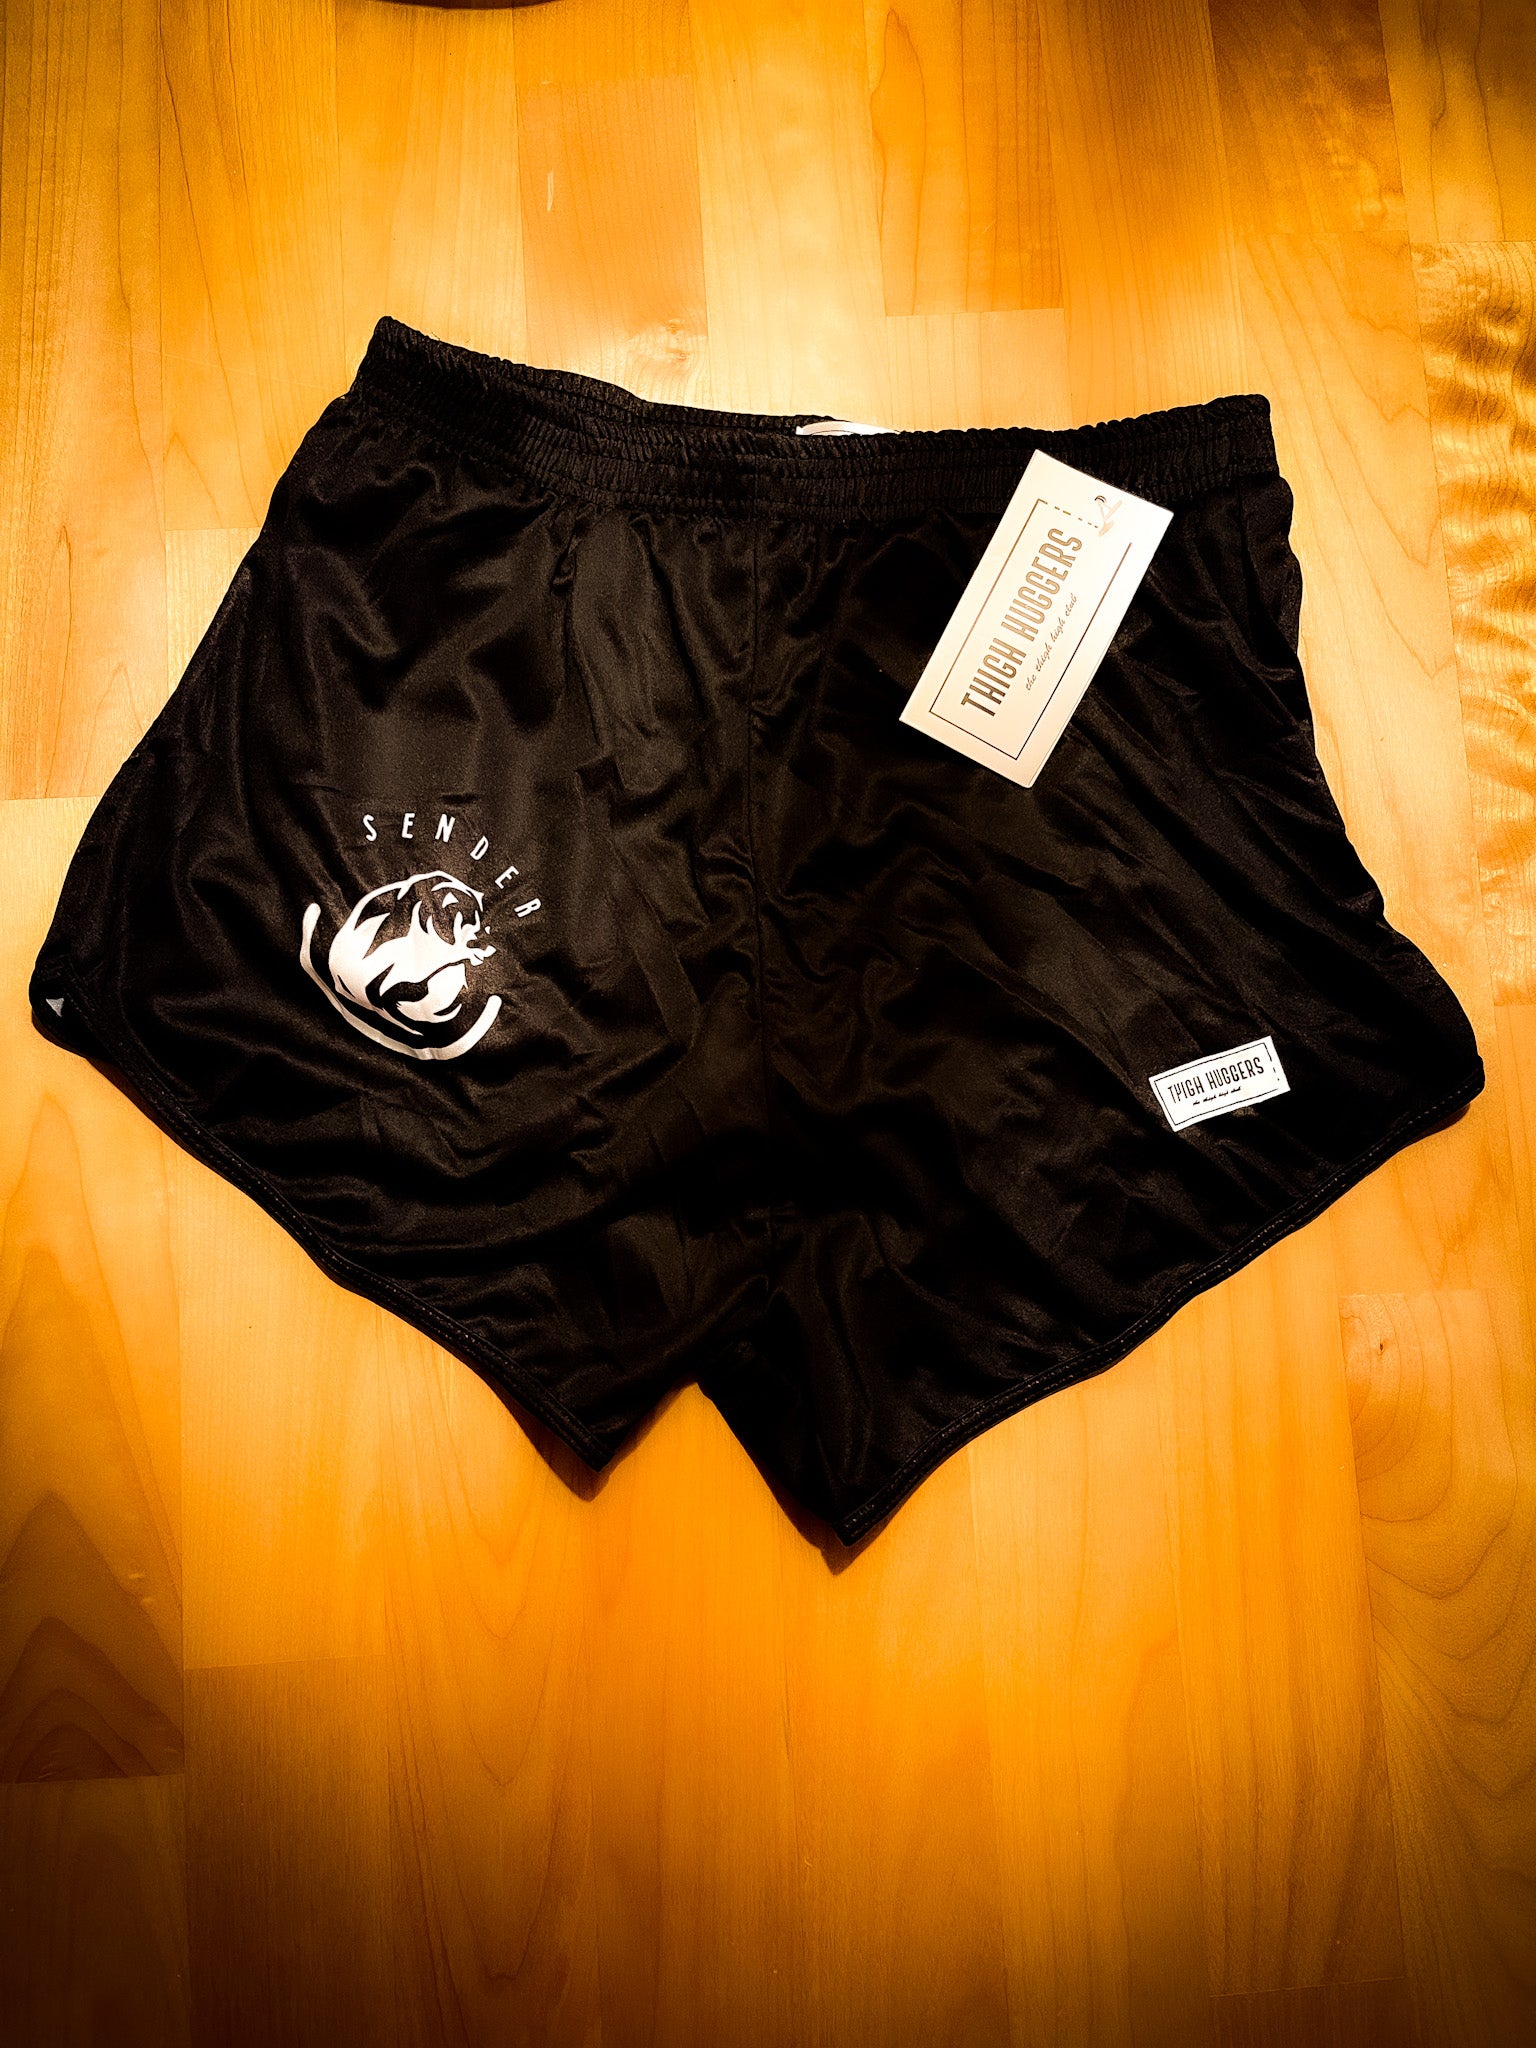 Sender Logo - Thigh Hugger's Shorts - Black